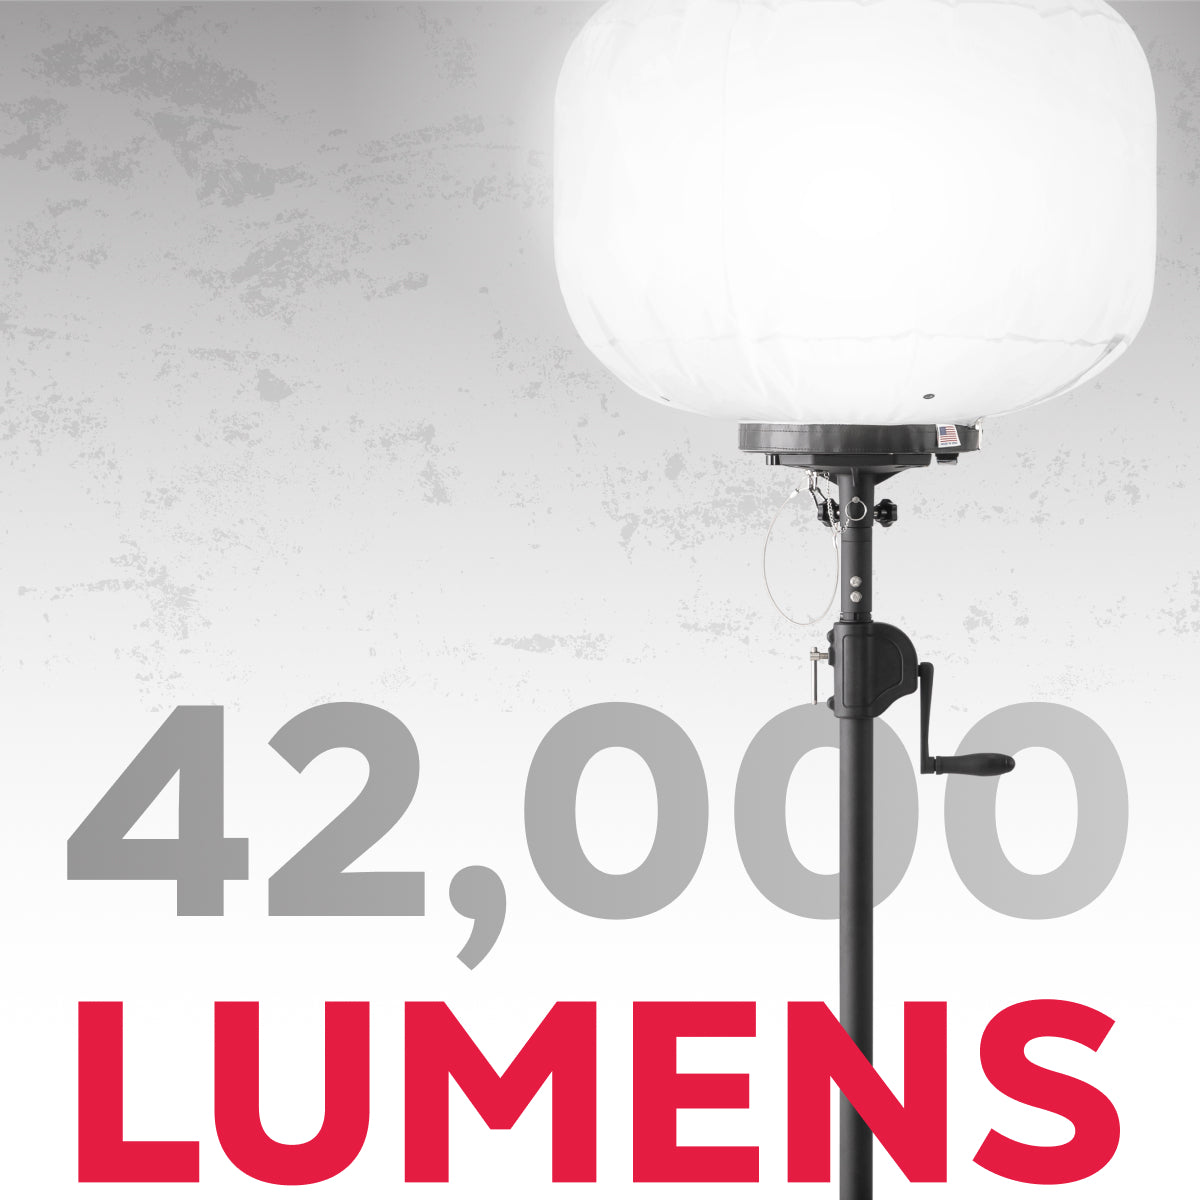 42,000 Lumens LED Balloon Light Tower